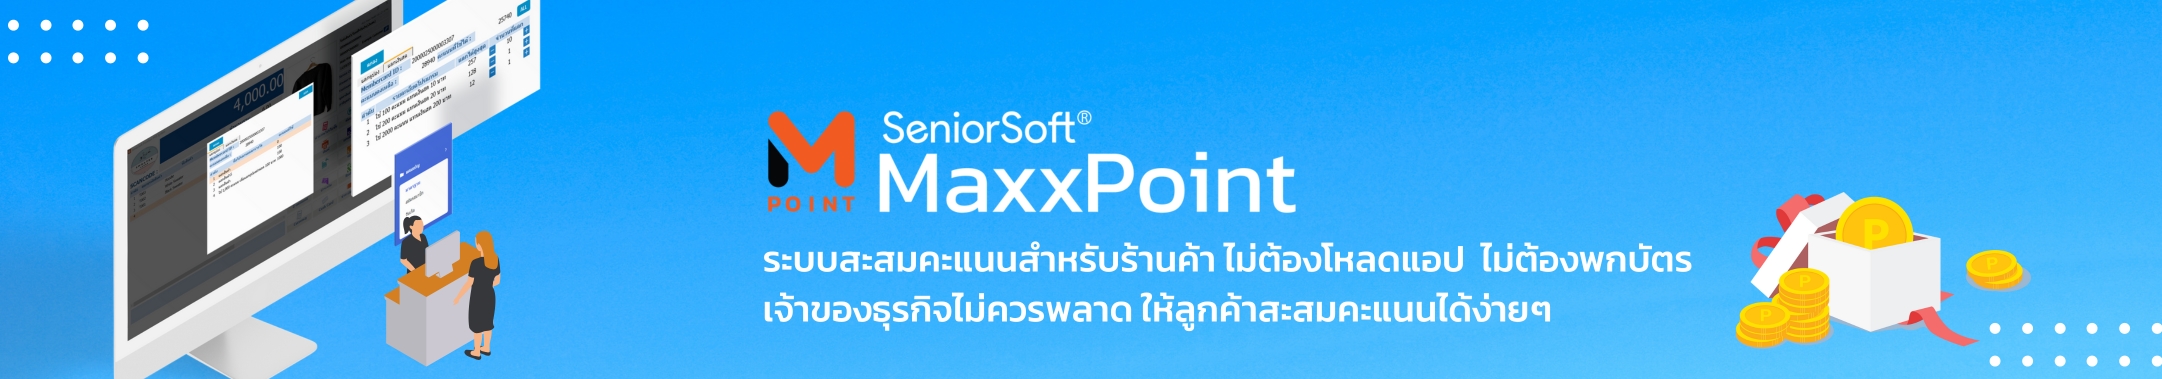 sns maxx point banner